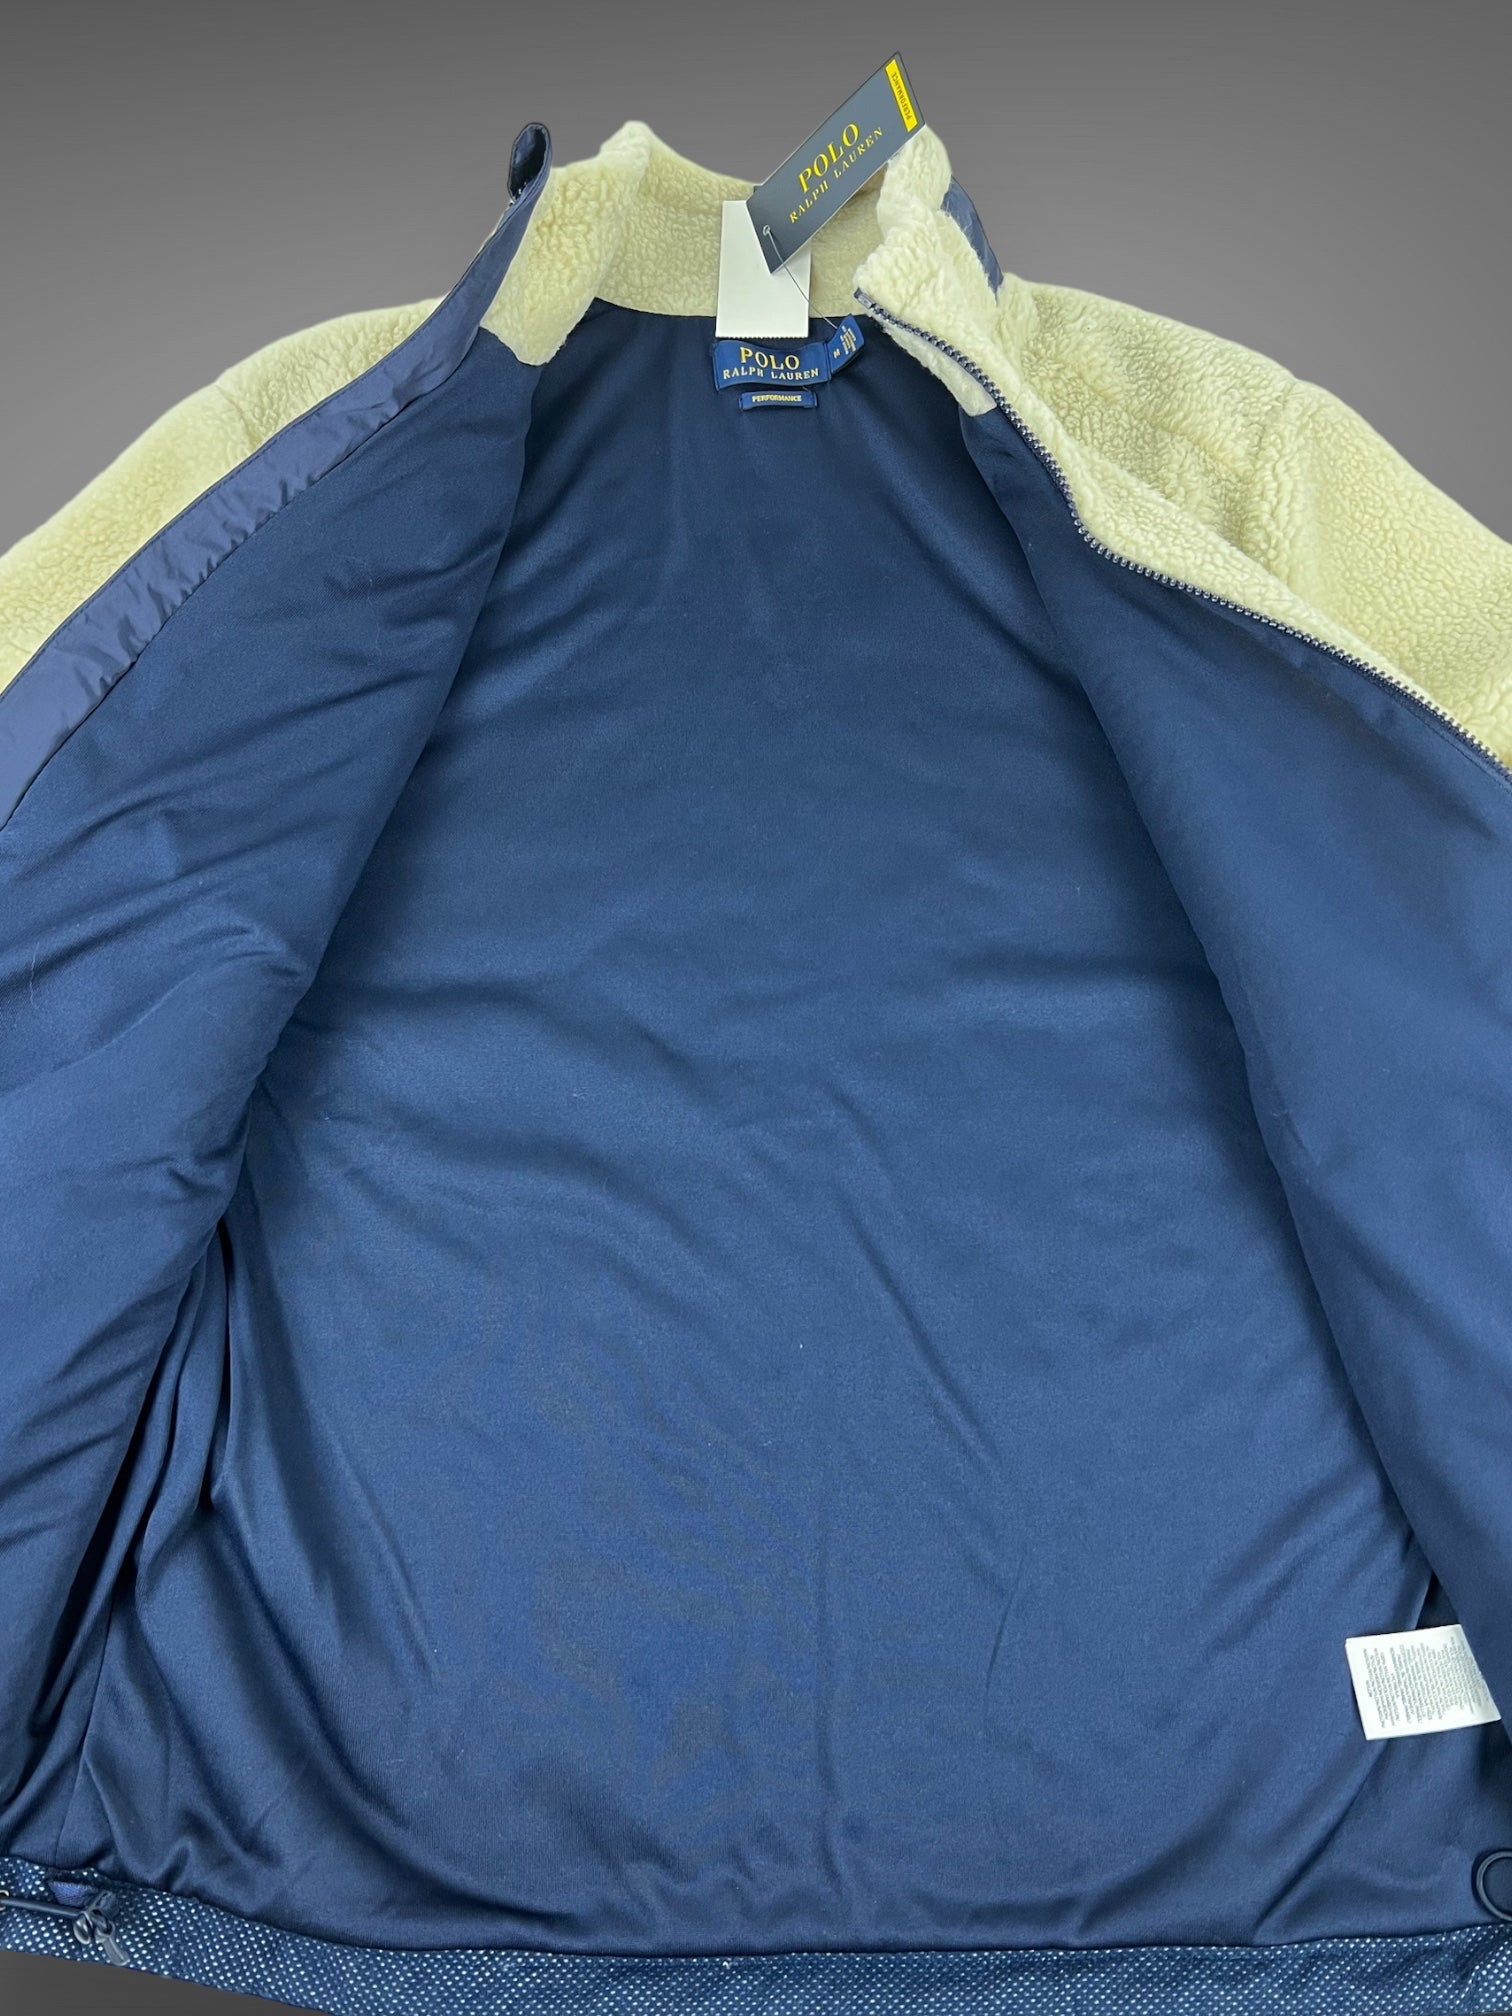 Deadstock 2017 Polo Ralph Lauren deep pile fleece jacket L